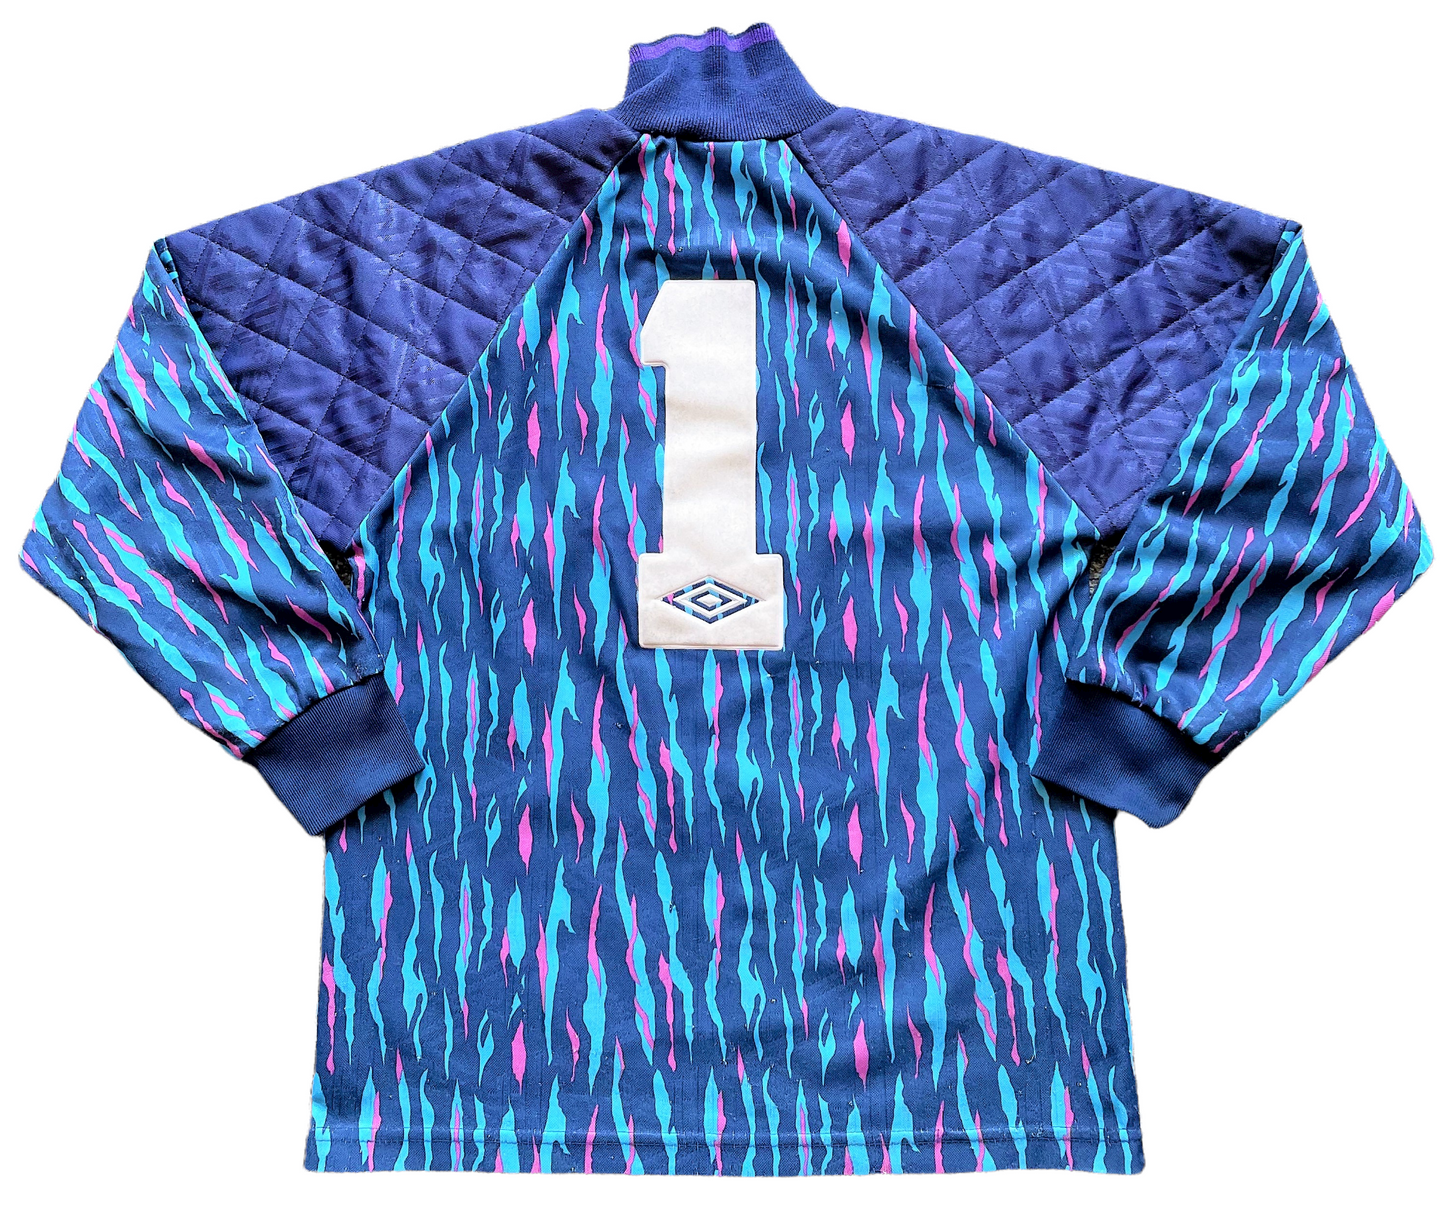 Tottenham 1991 Goalkeeper Shirt (average) size faded Adults XXS/Youths. Height 21 inch